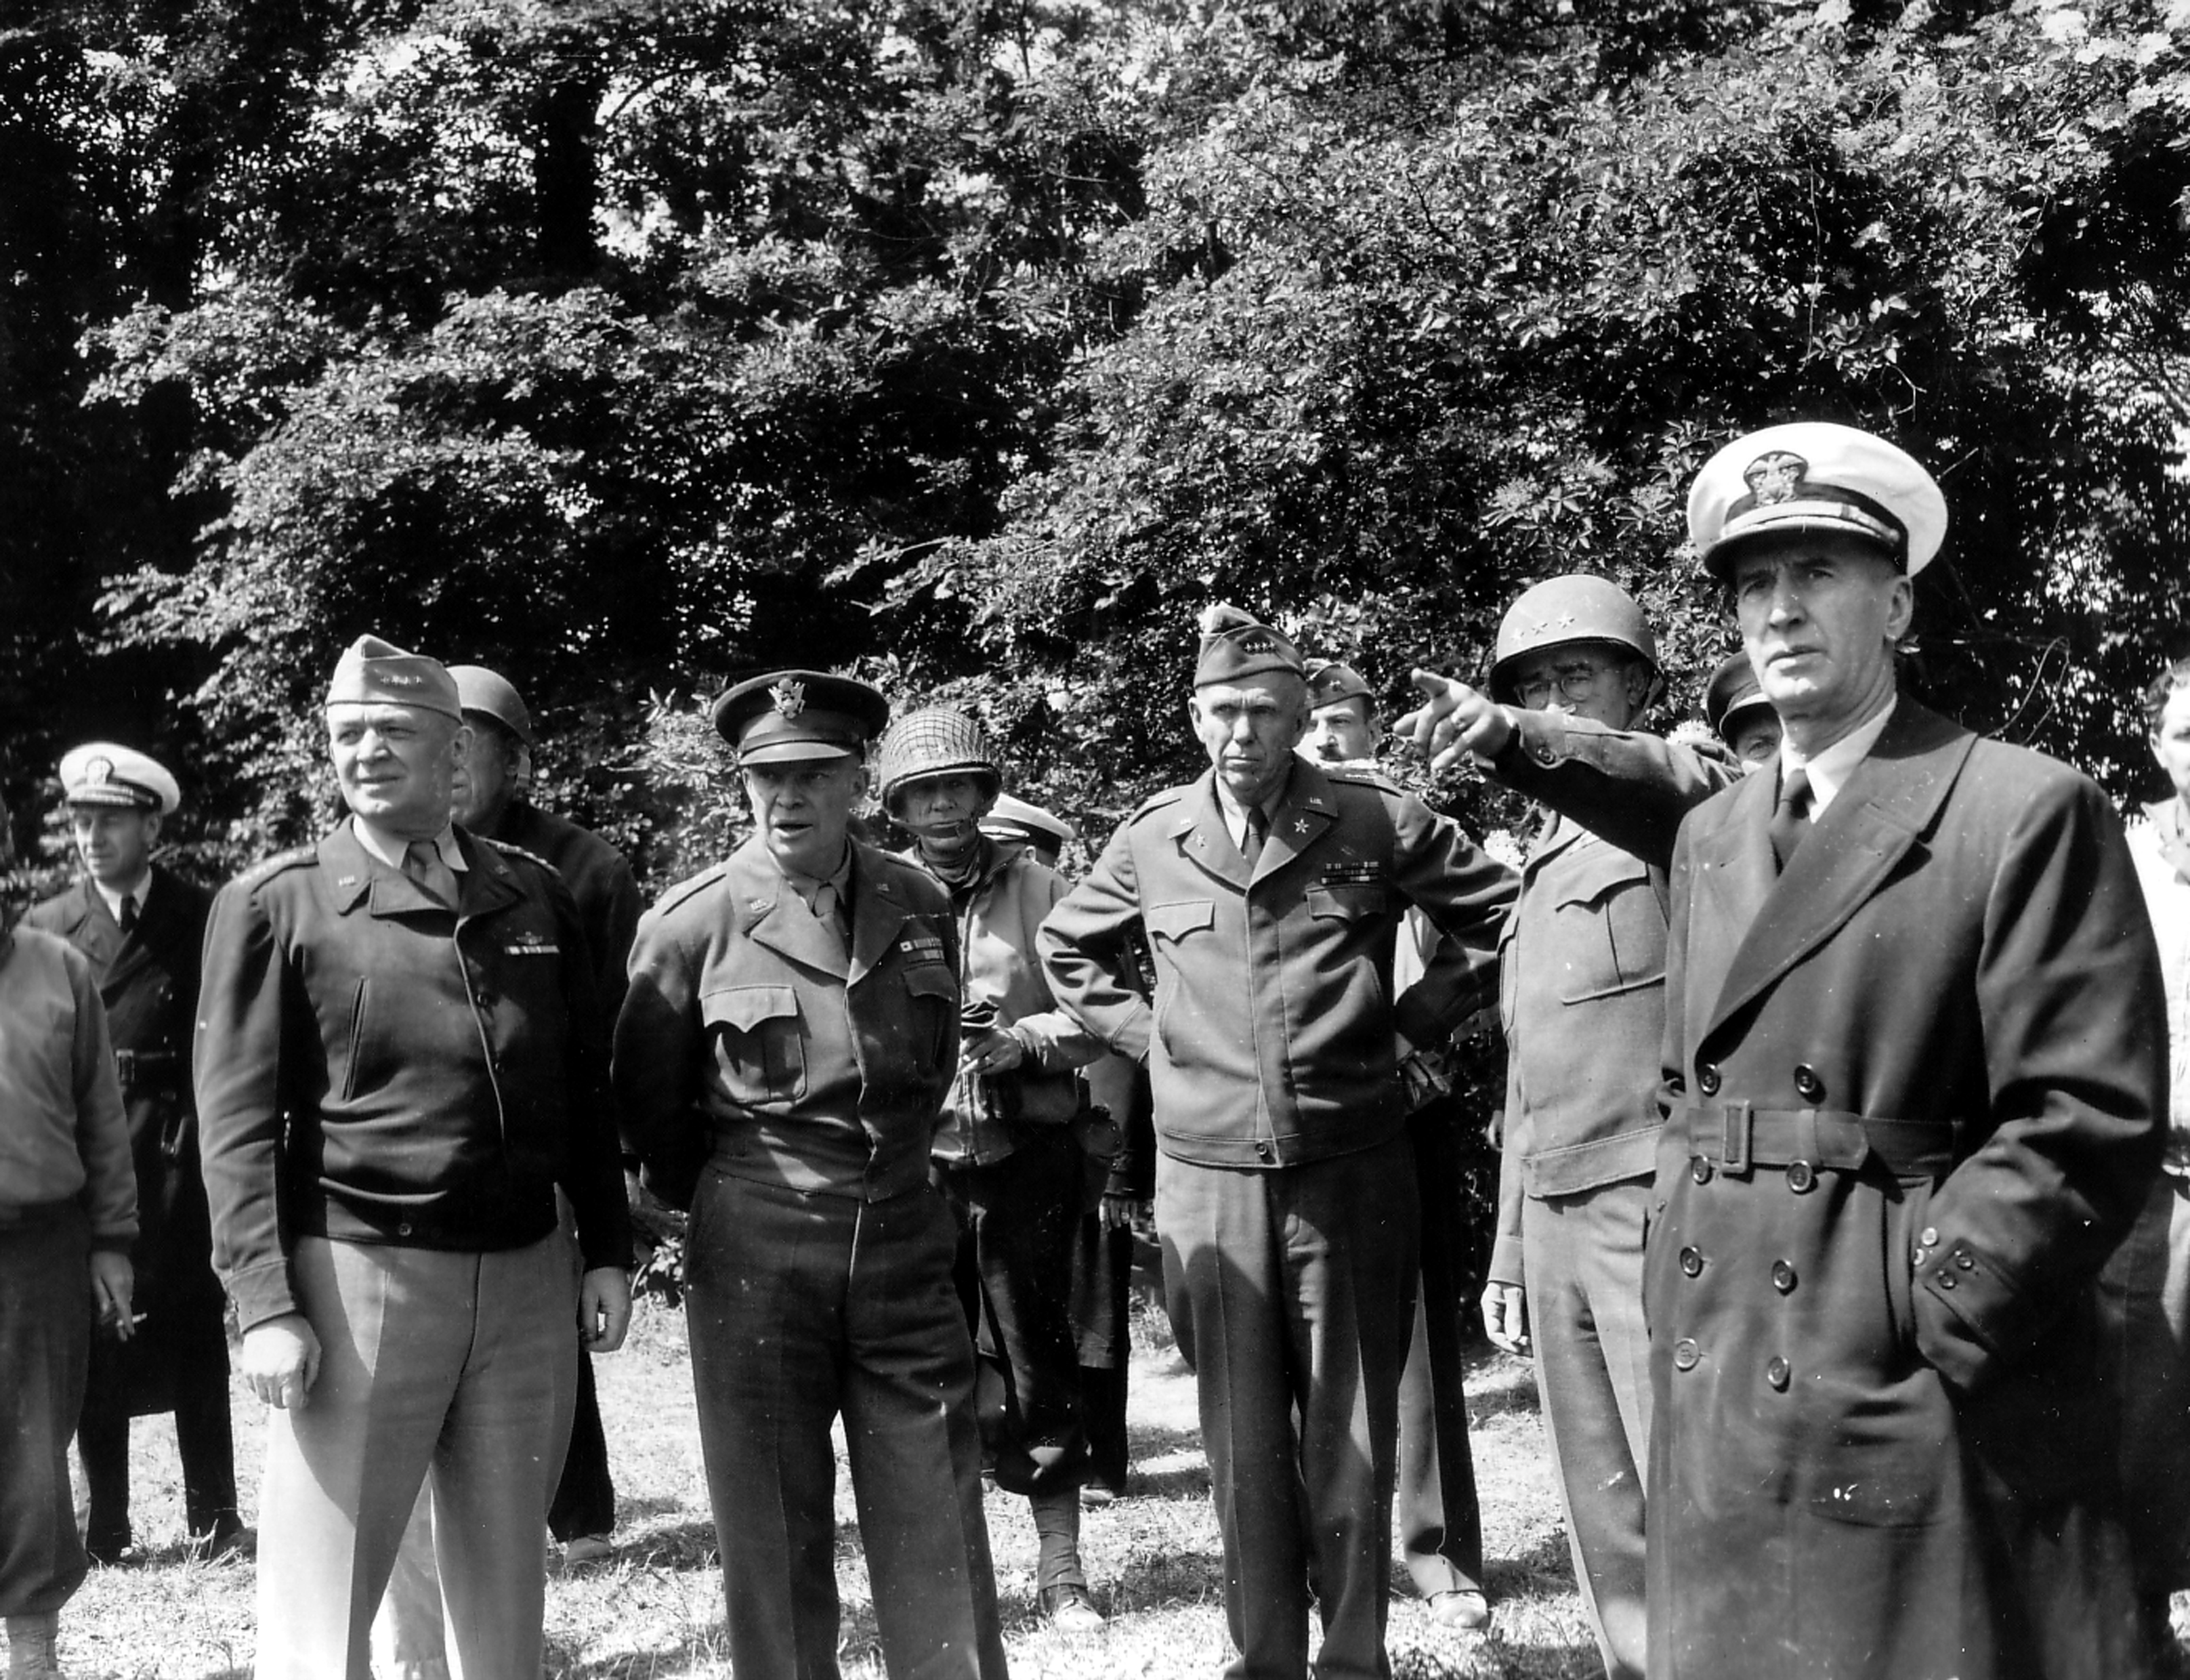 Gen “Hap” Arnold, Gen Dwight Eisenhower, MajGen “Cowboy Pete” Corlett (helmet), Gen George Marshall, LtGen Omar Bradley (pointing), and Adm Ernest King visit the guns moved from Pt du Hoc, Normandy, France, Jun 12, 1944.